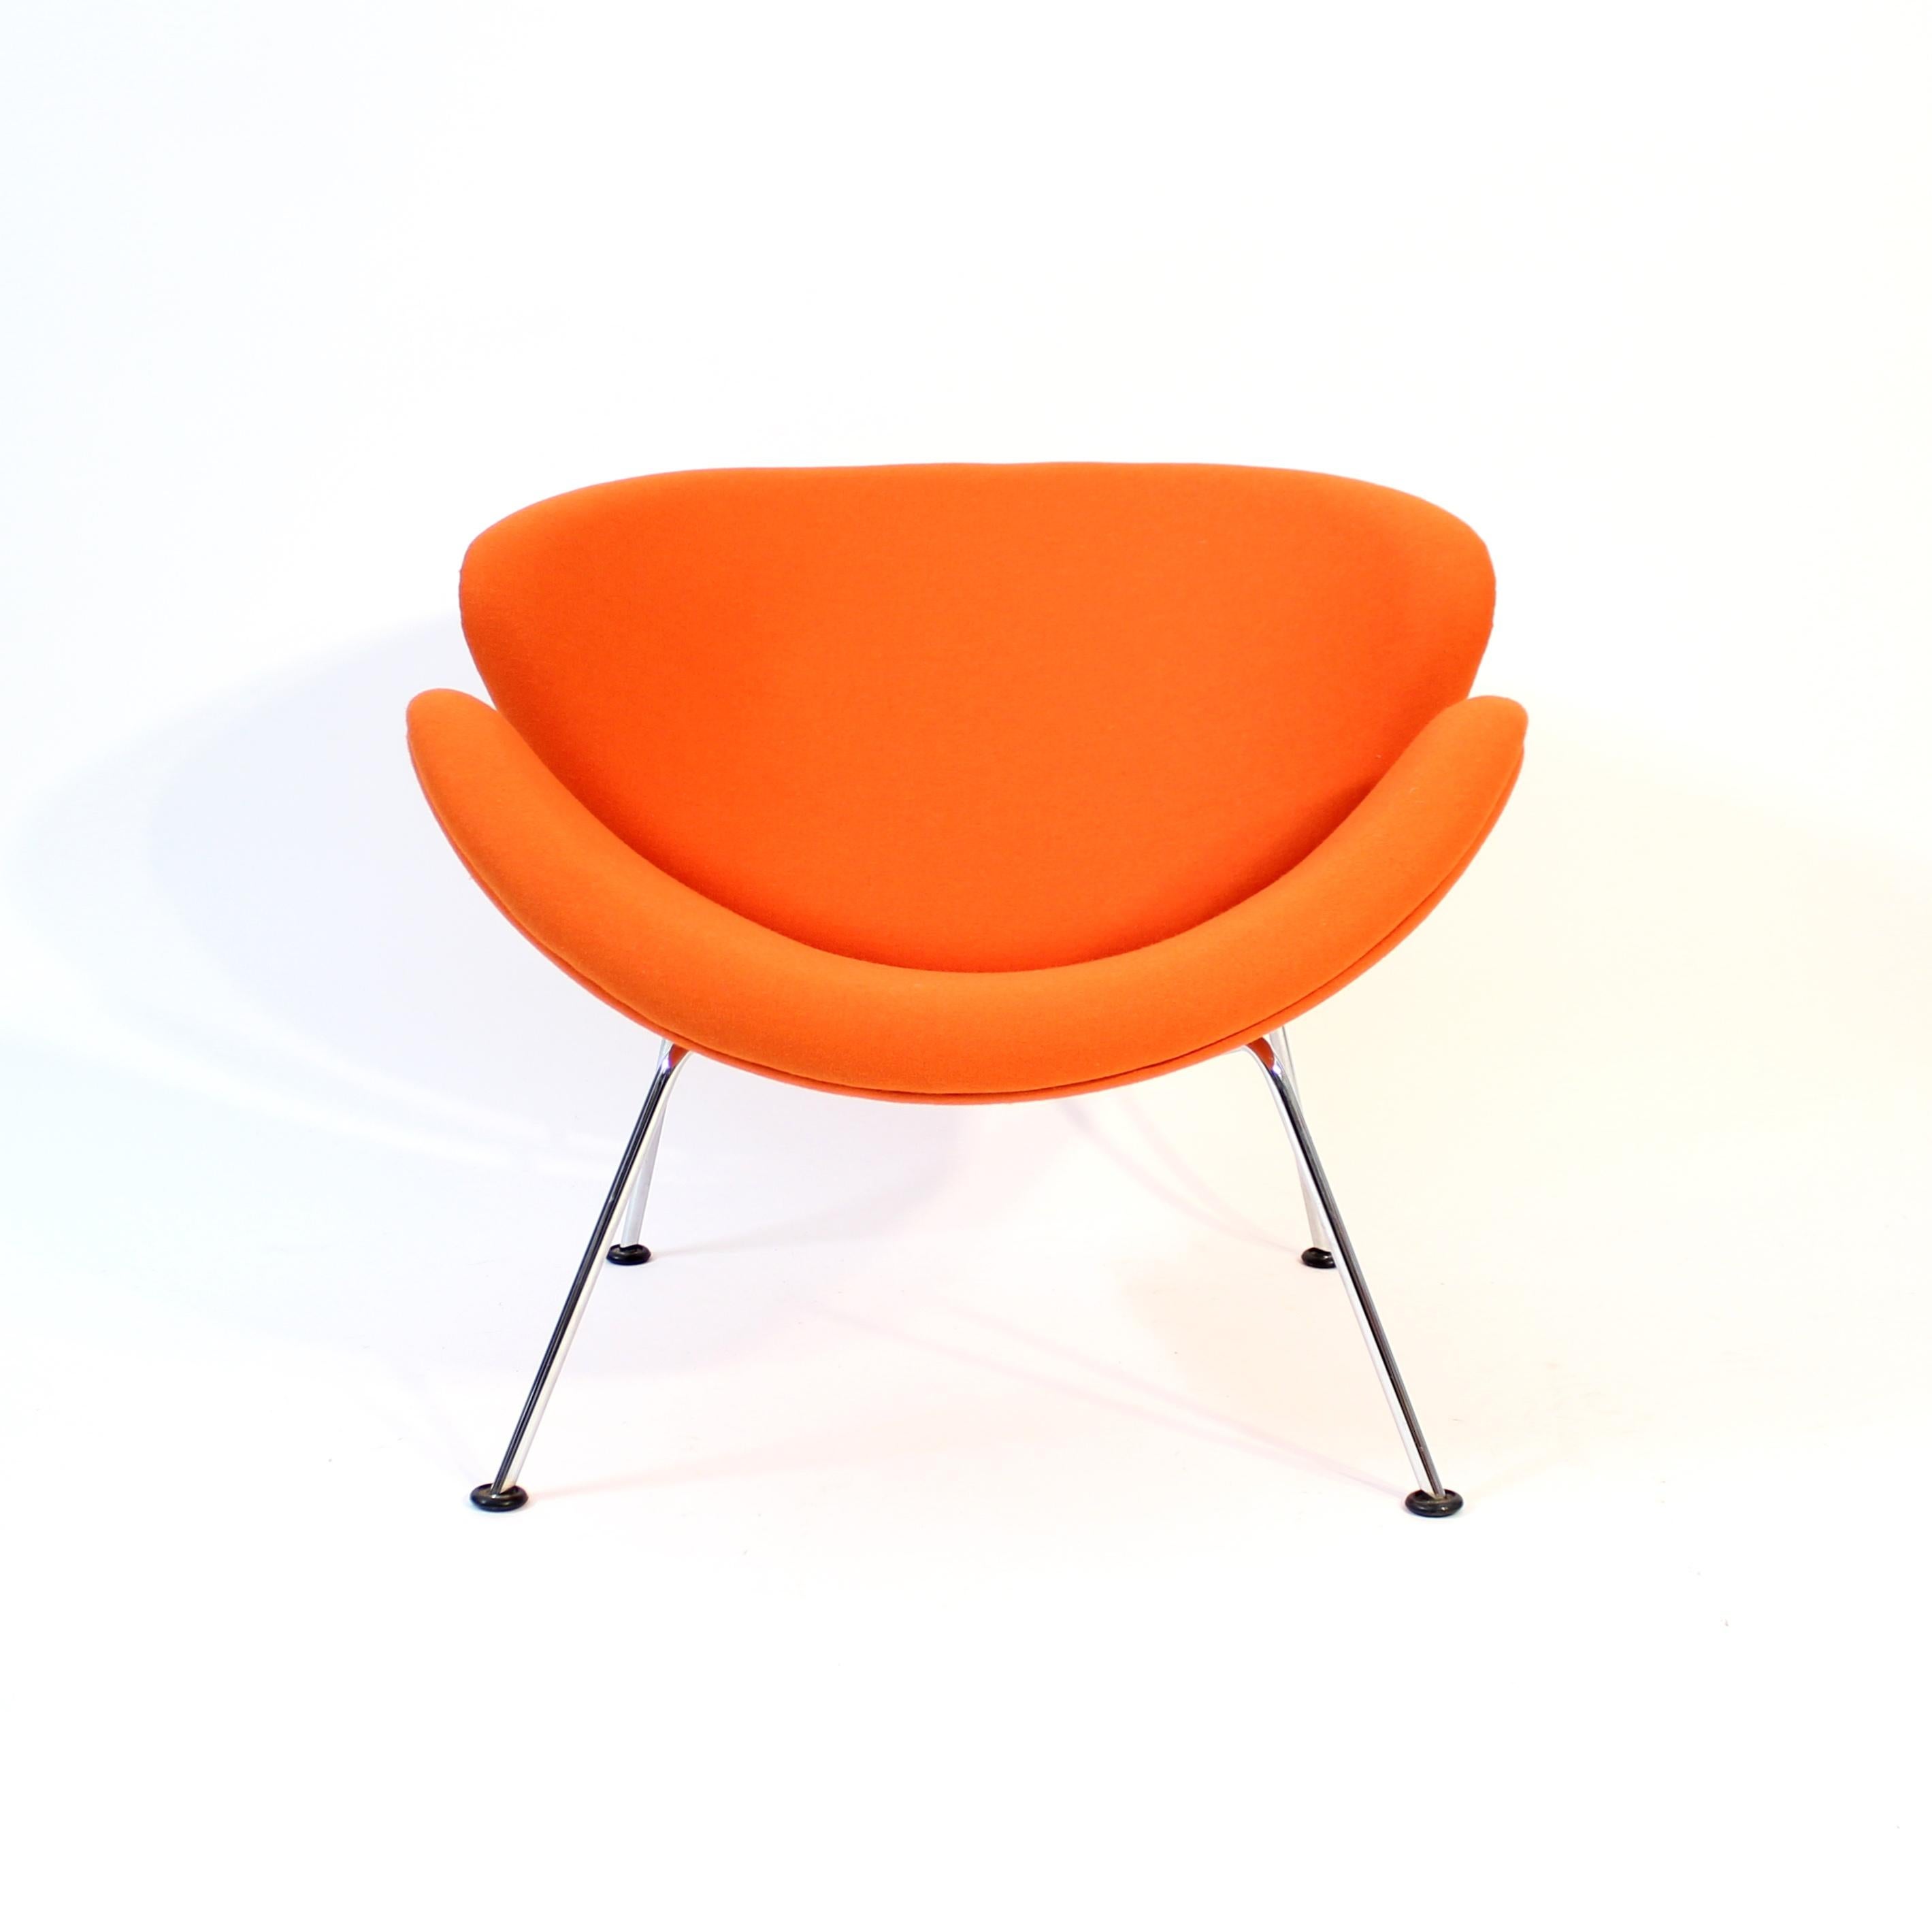 20th Century Pierre Paulin, Orange Slice chair, Artifort, 1960 For Sale